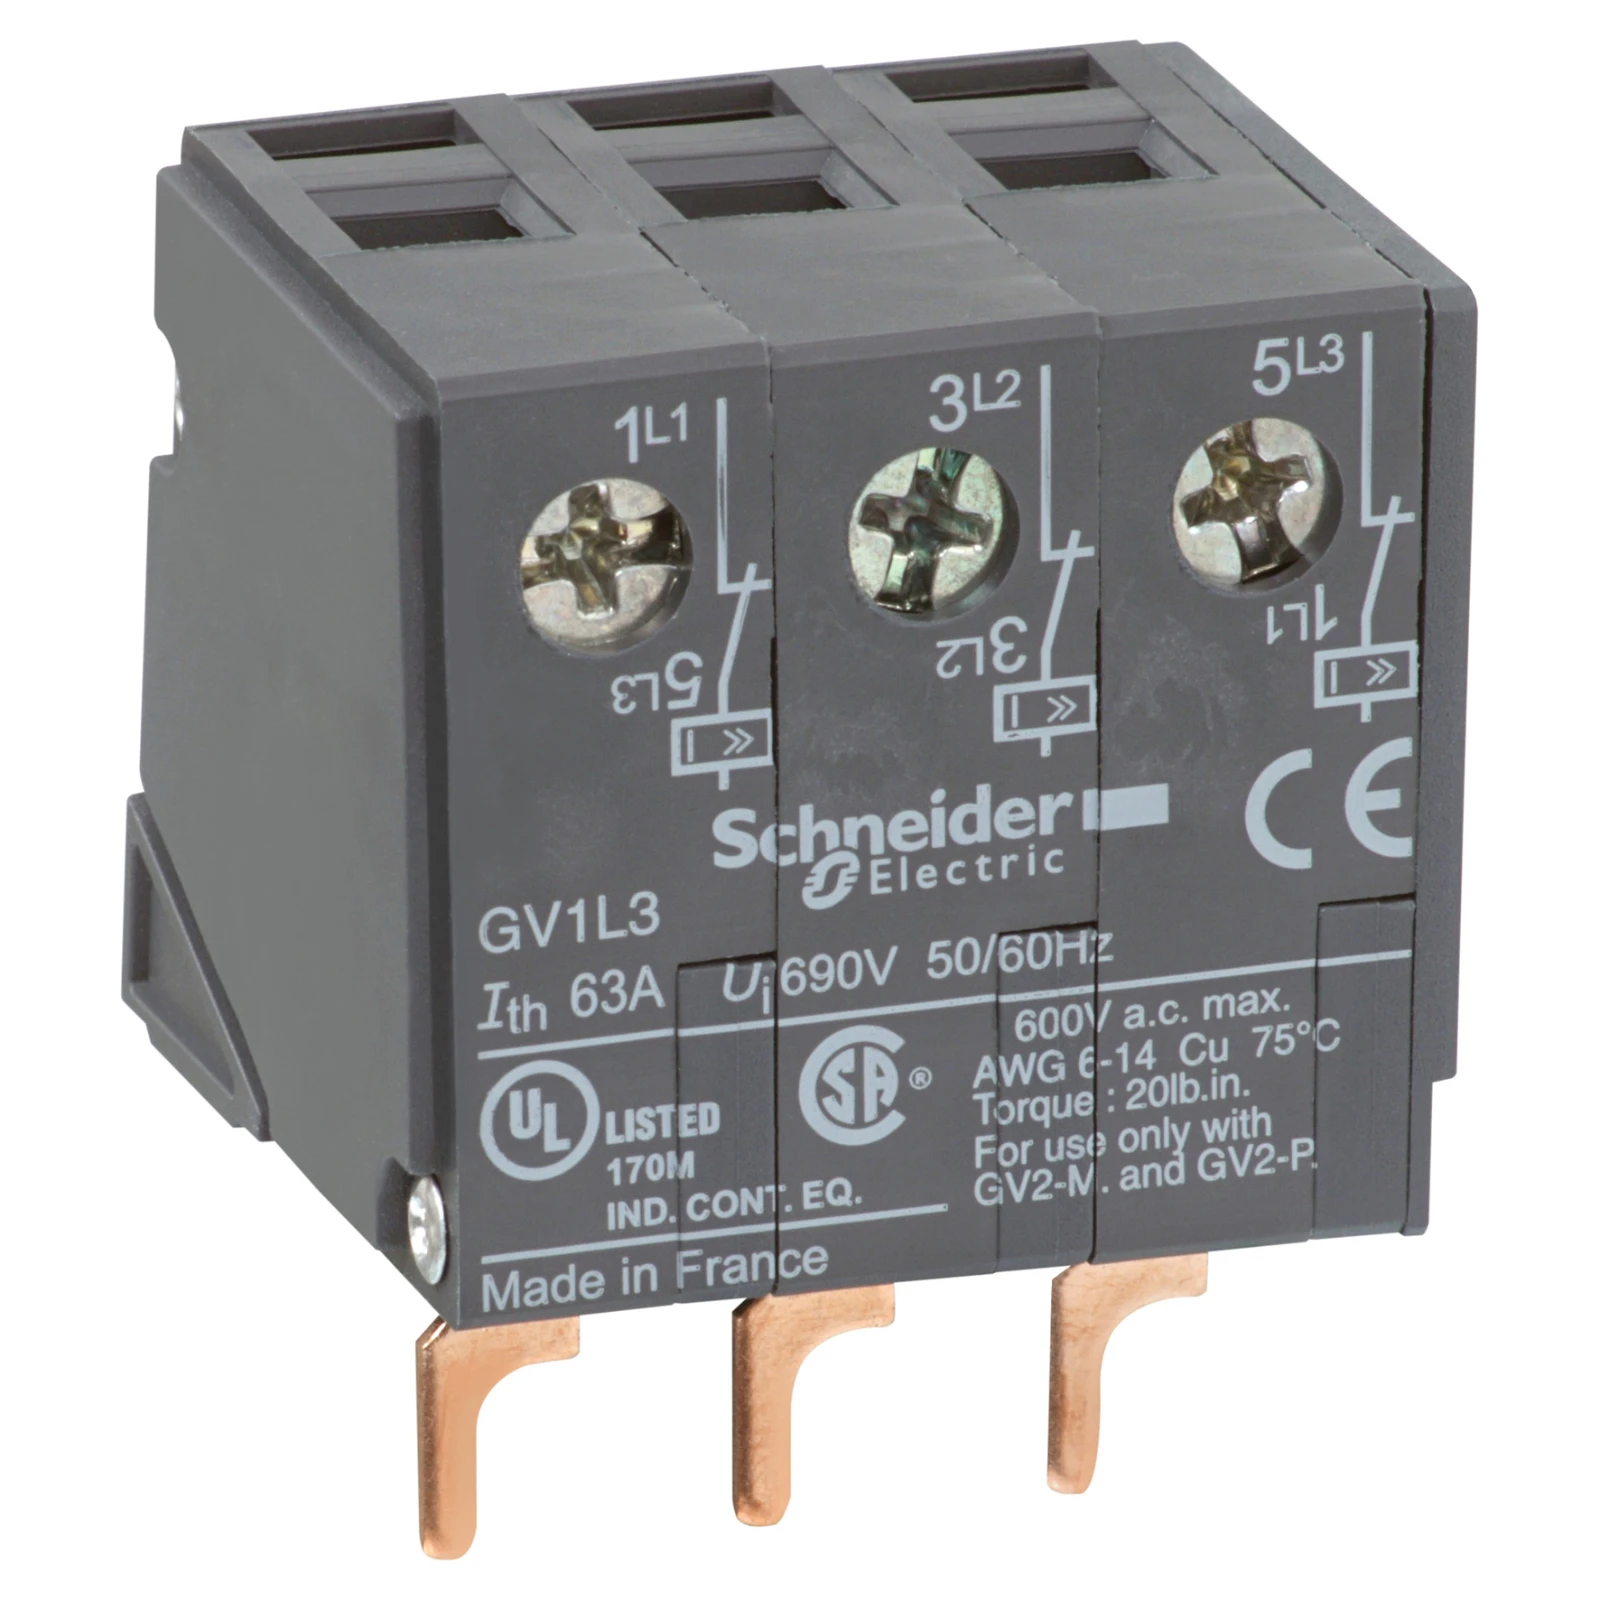 1038469 - Schneider Electric GV1L3